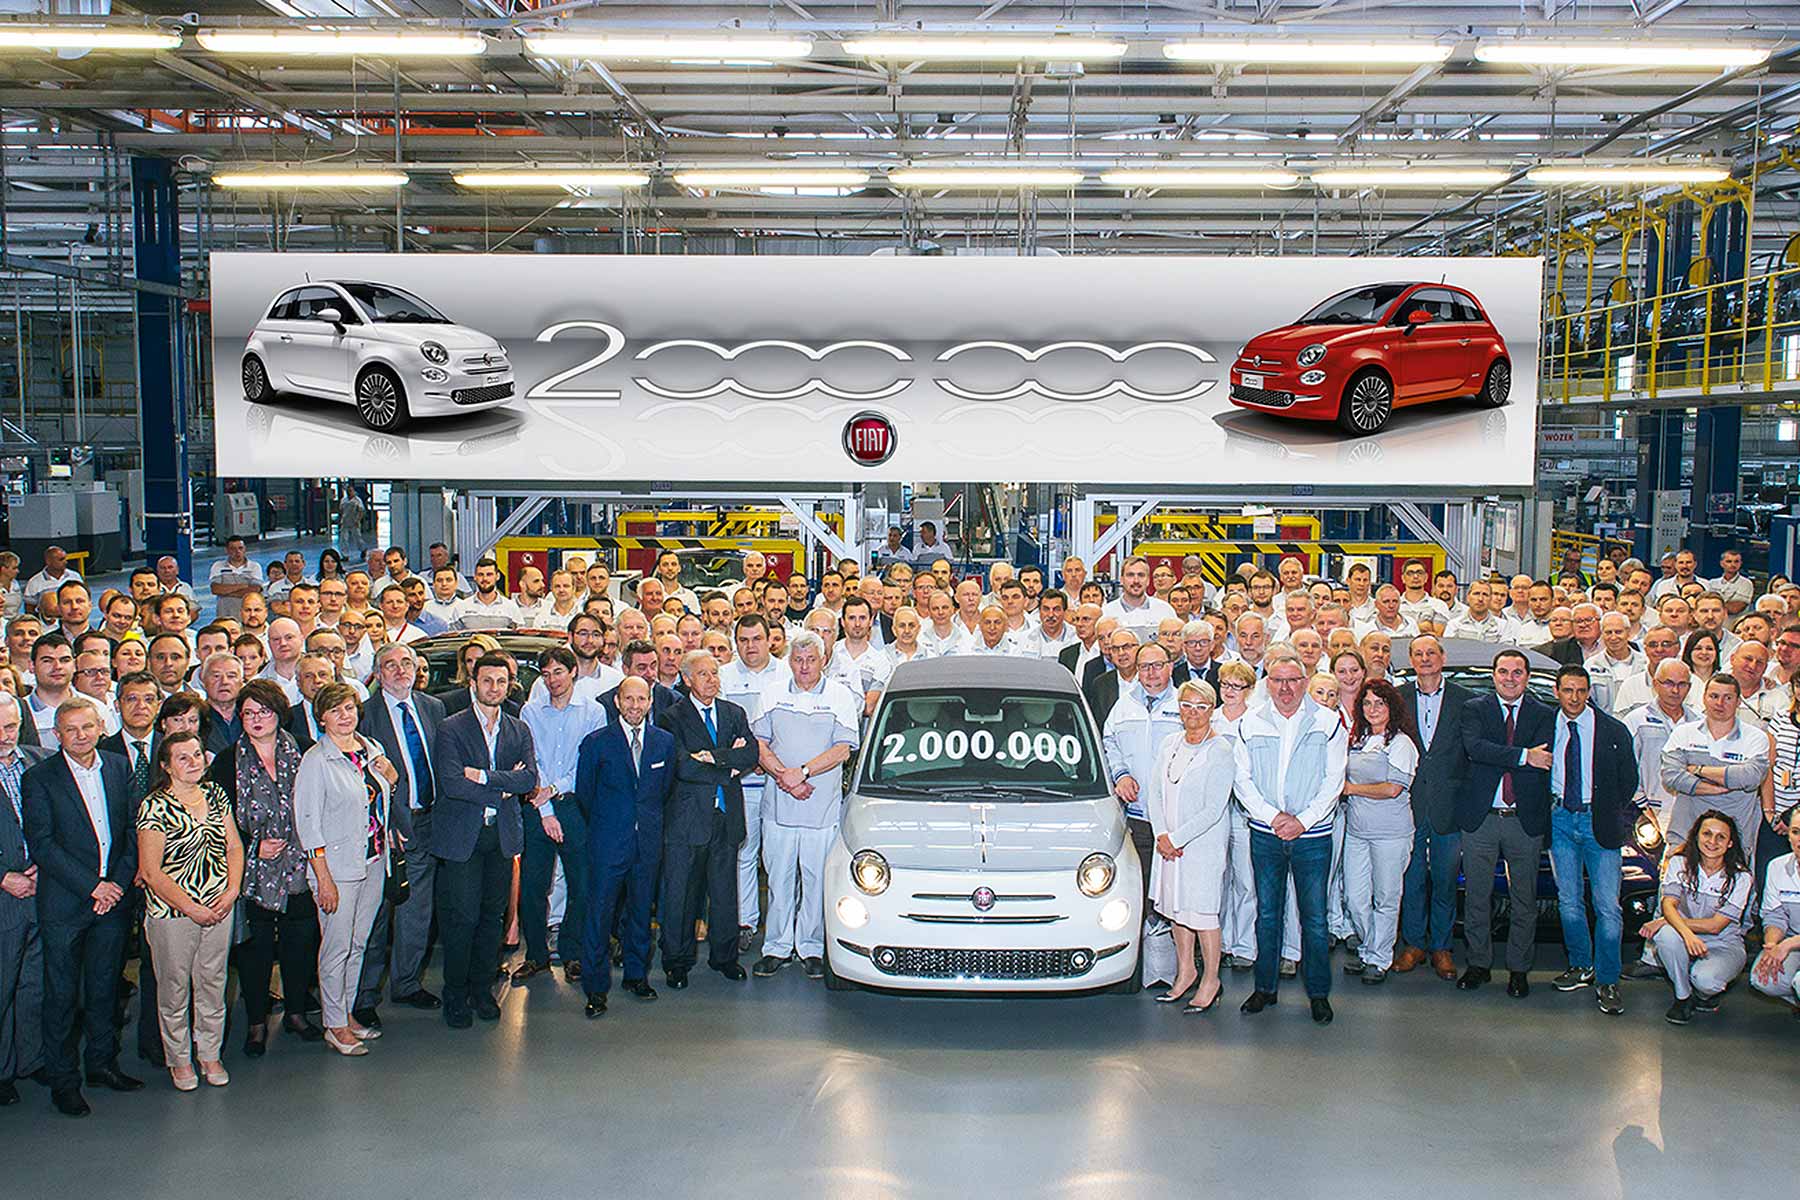 The 2 millionth Fiat 500